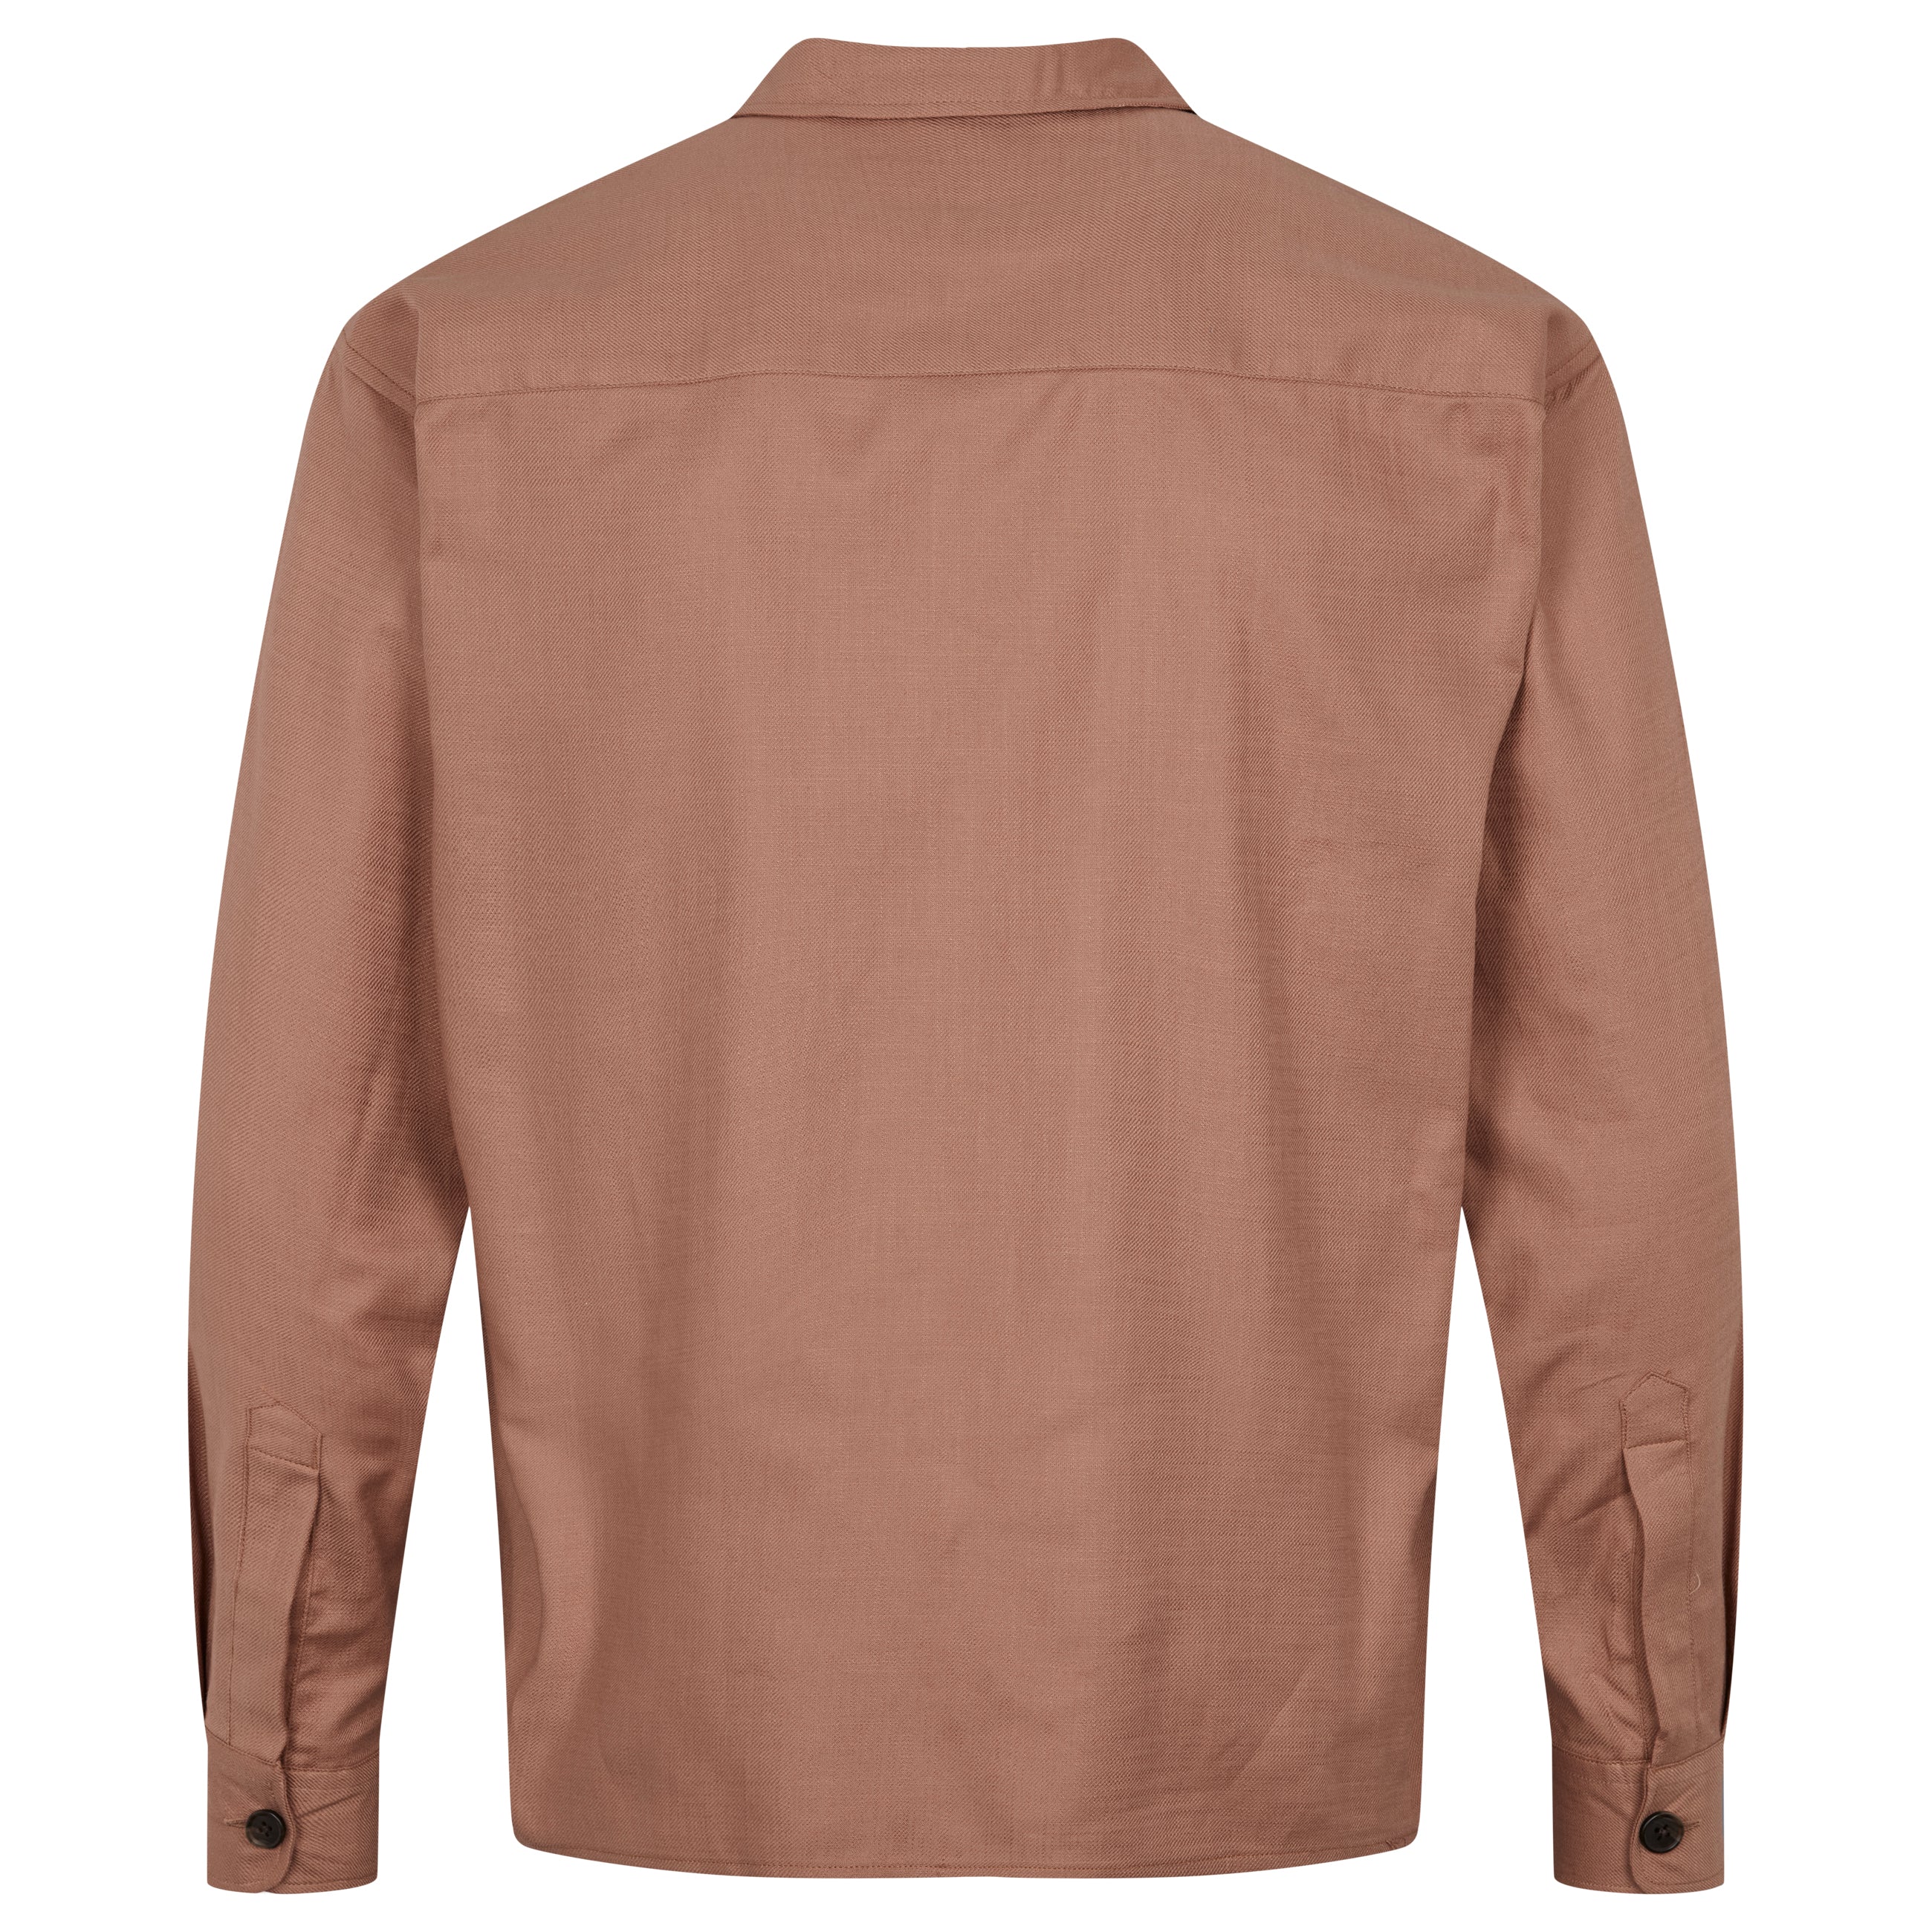 By Garment Makers Storm almindelig Overshirt skjorte LS 1530 Hazelnut